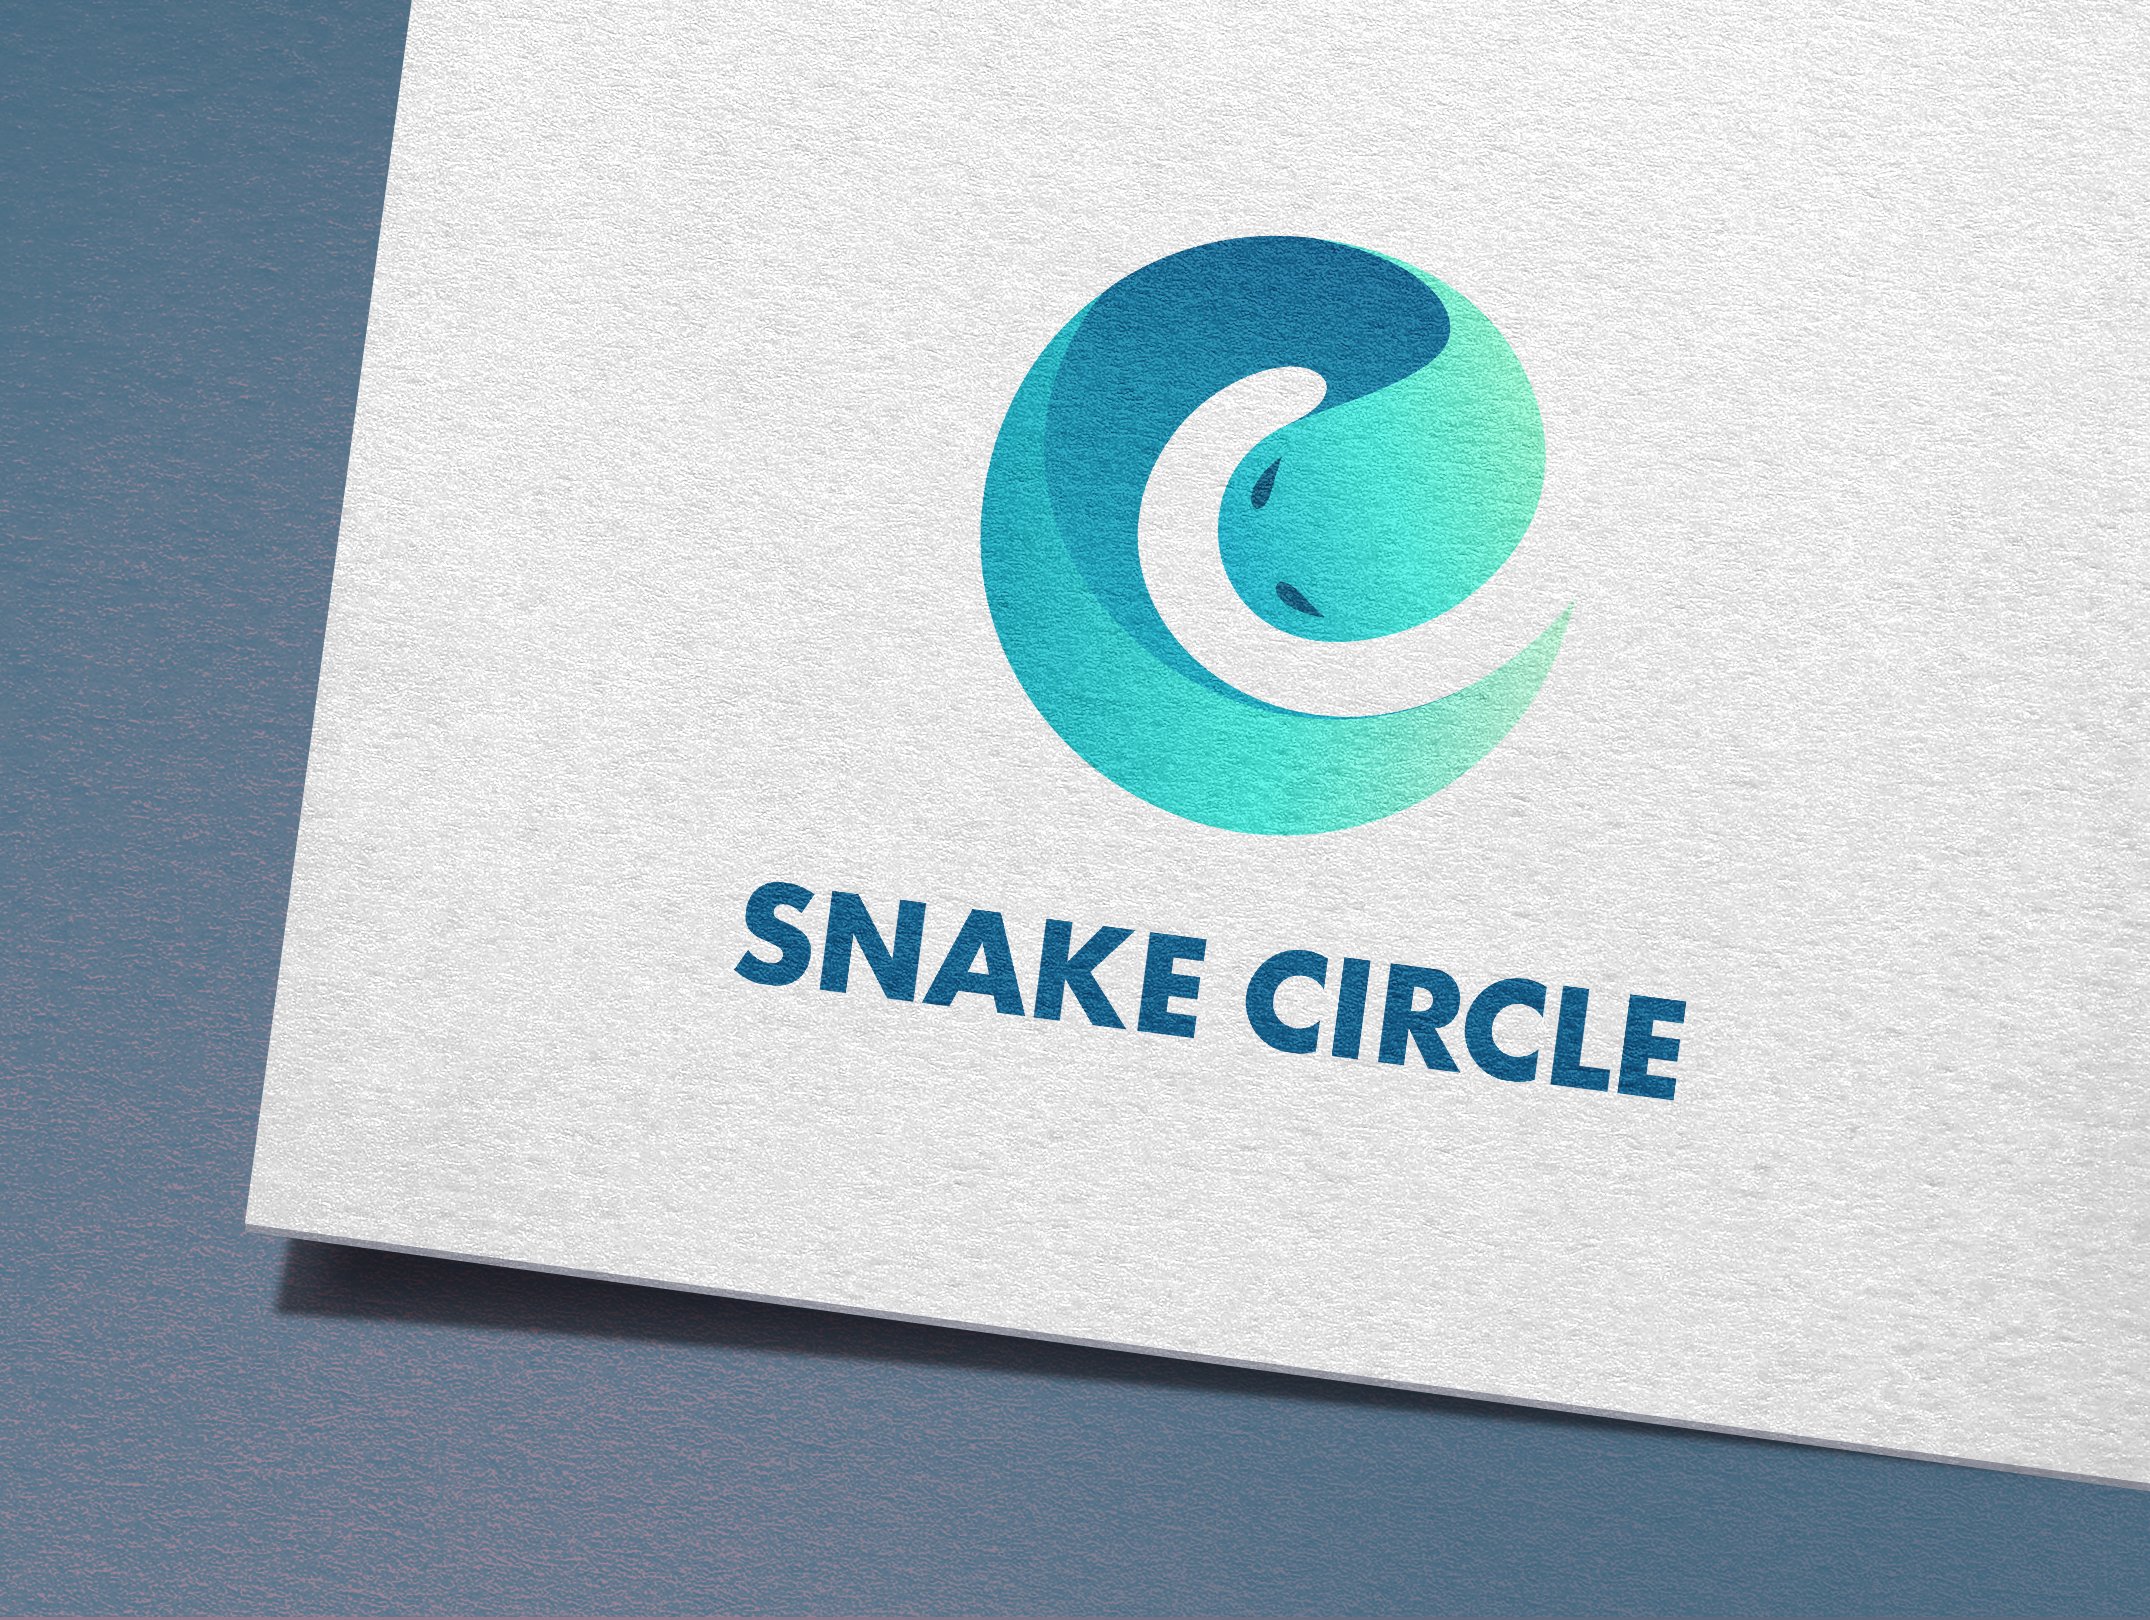 Snake Circle Logo cover image.